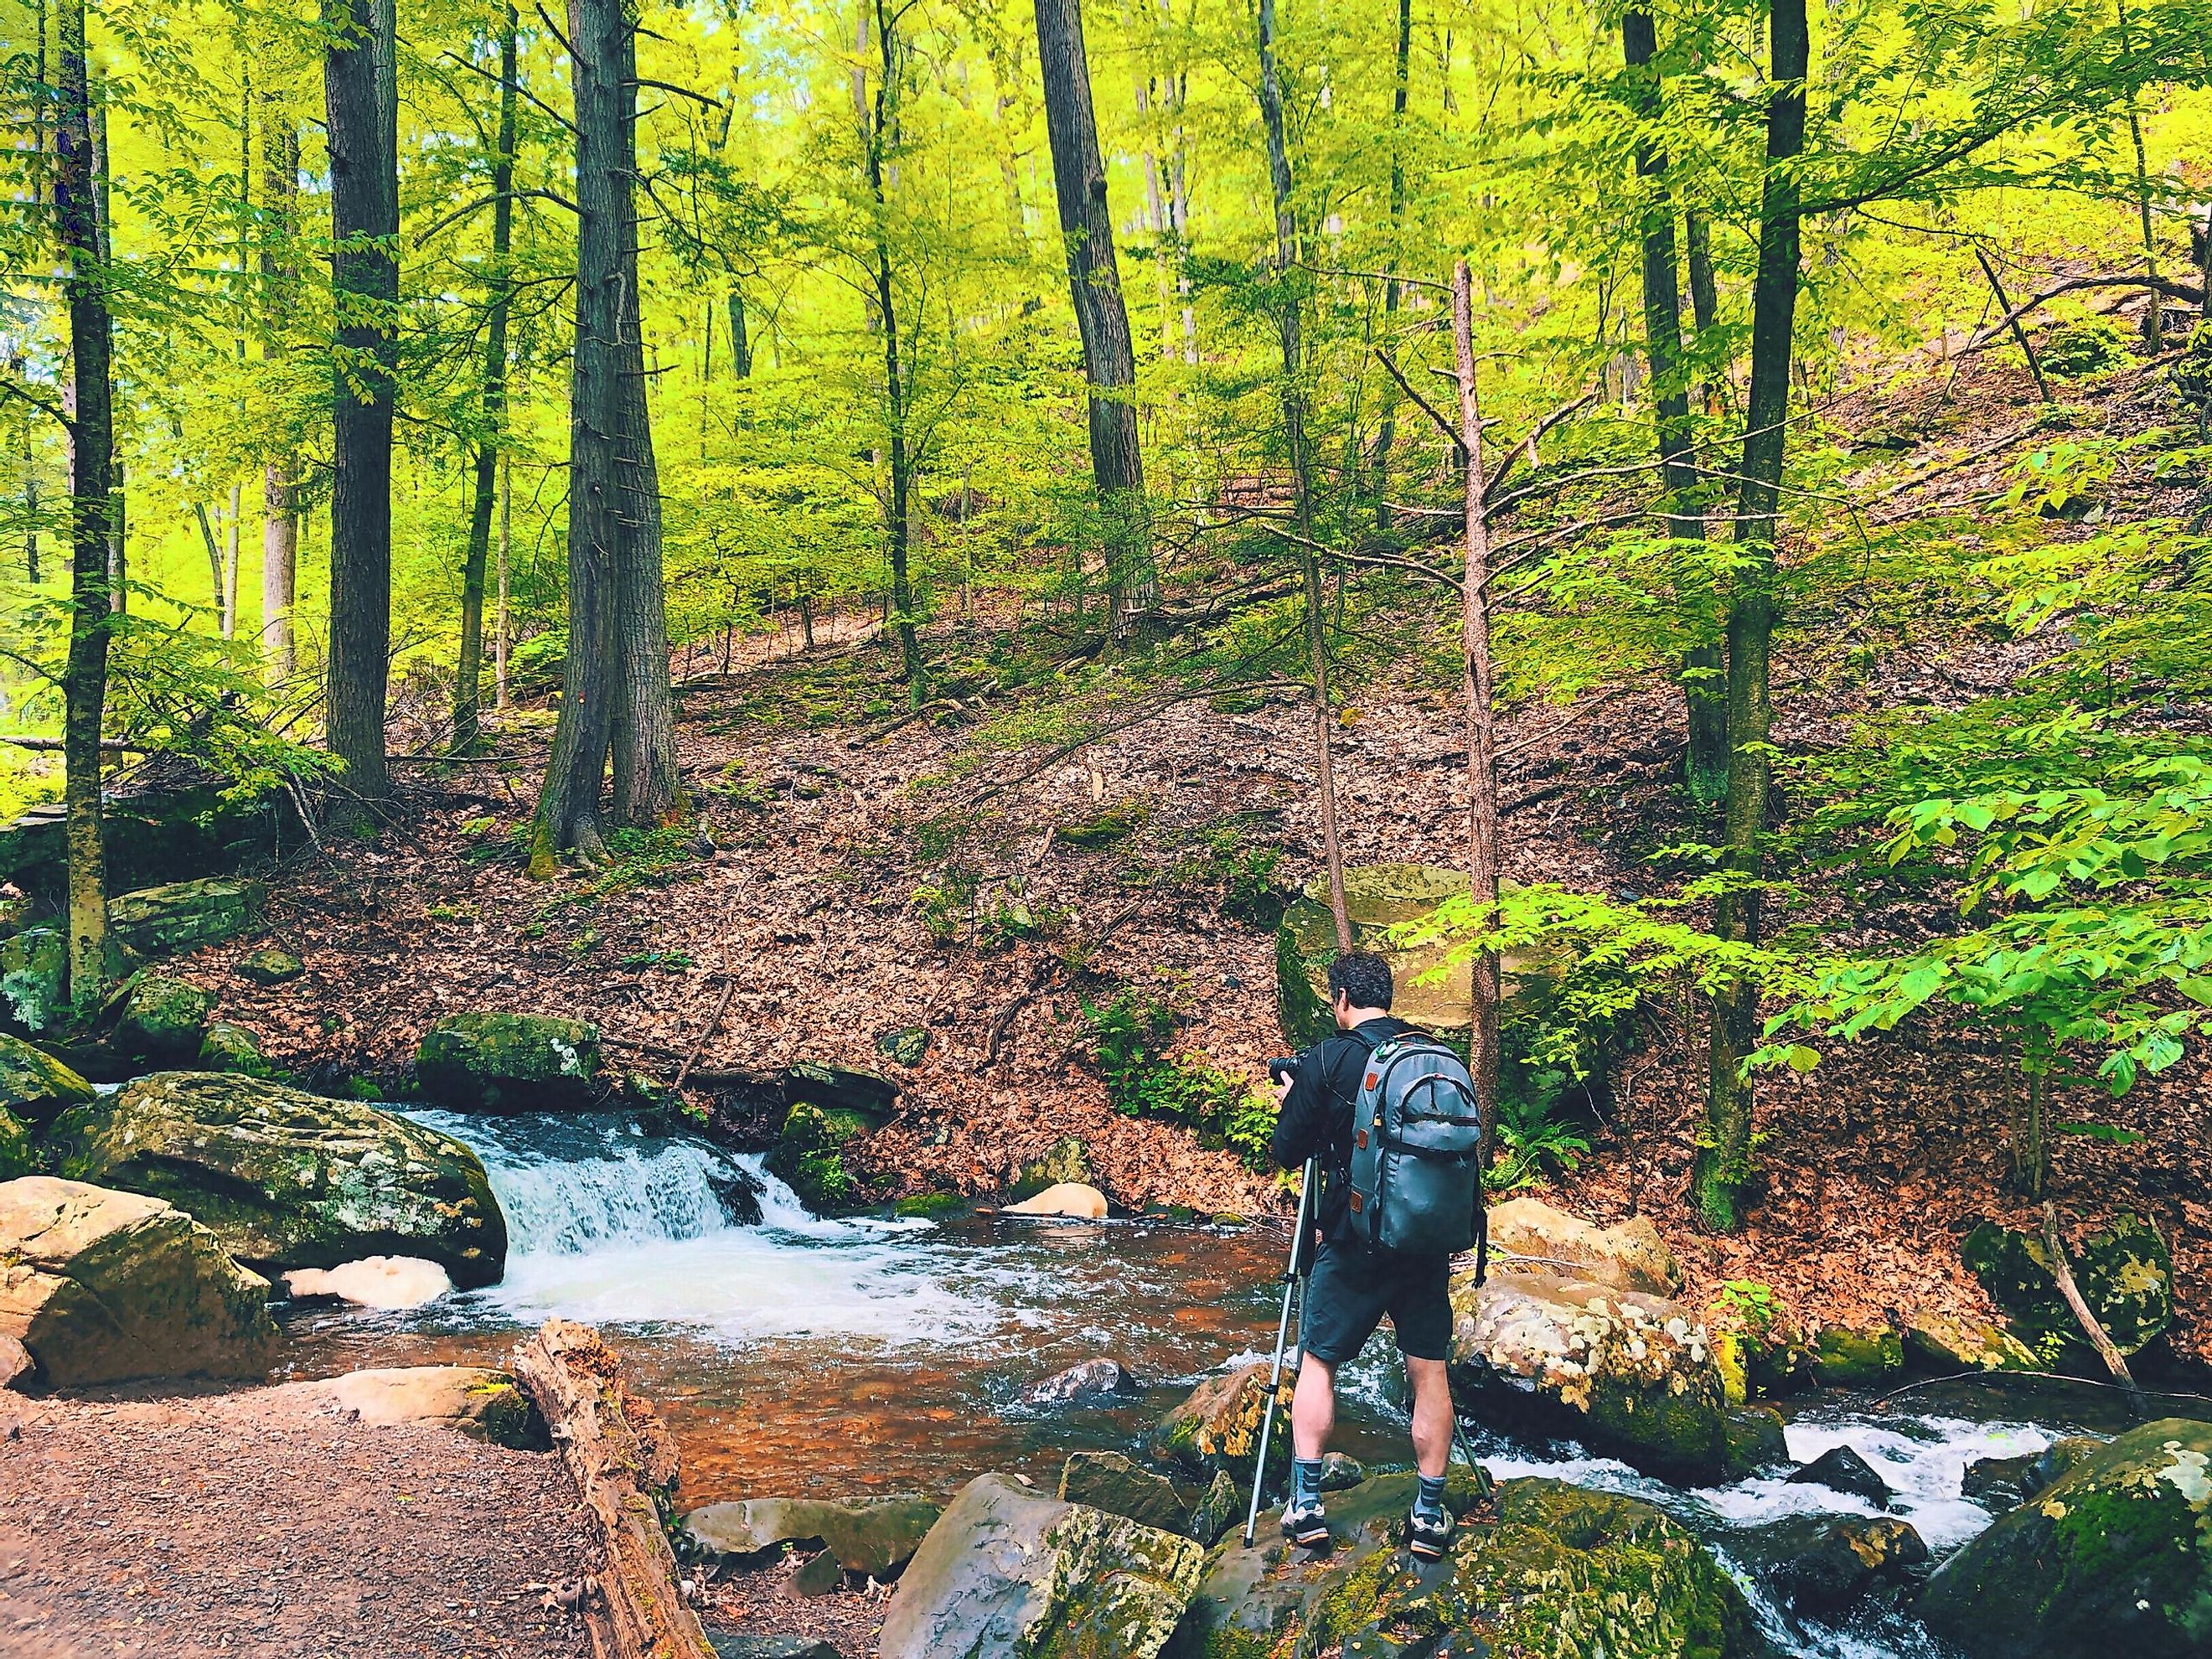 A hiker hiking through a nature trail in Pennsylvania.